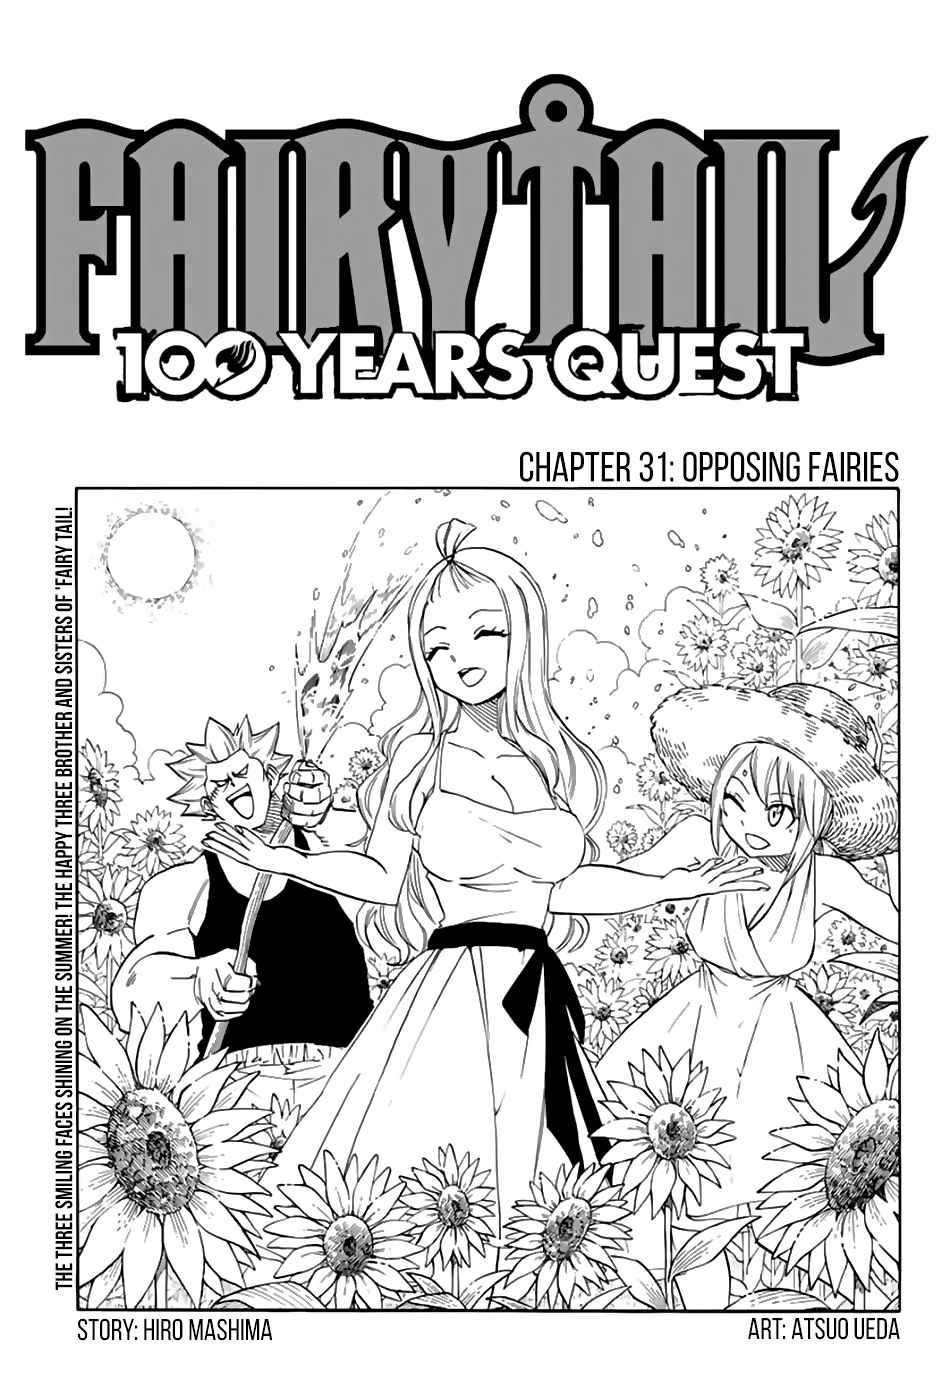 Fairy Tail: 100 Years Quest Ch. 31 Opposing Fairies